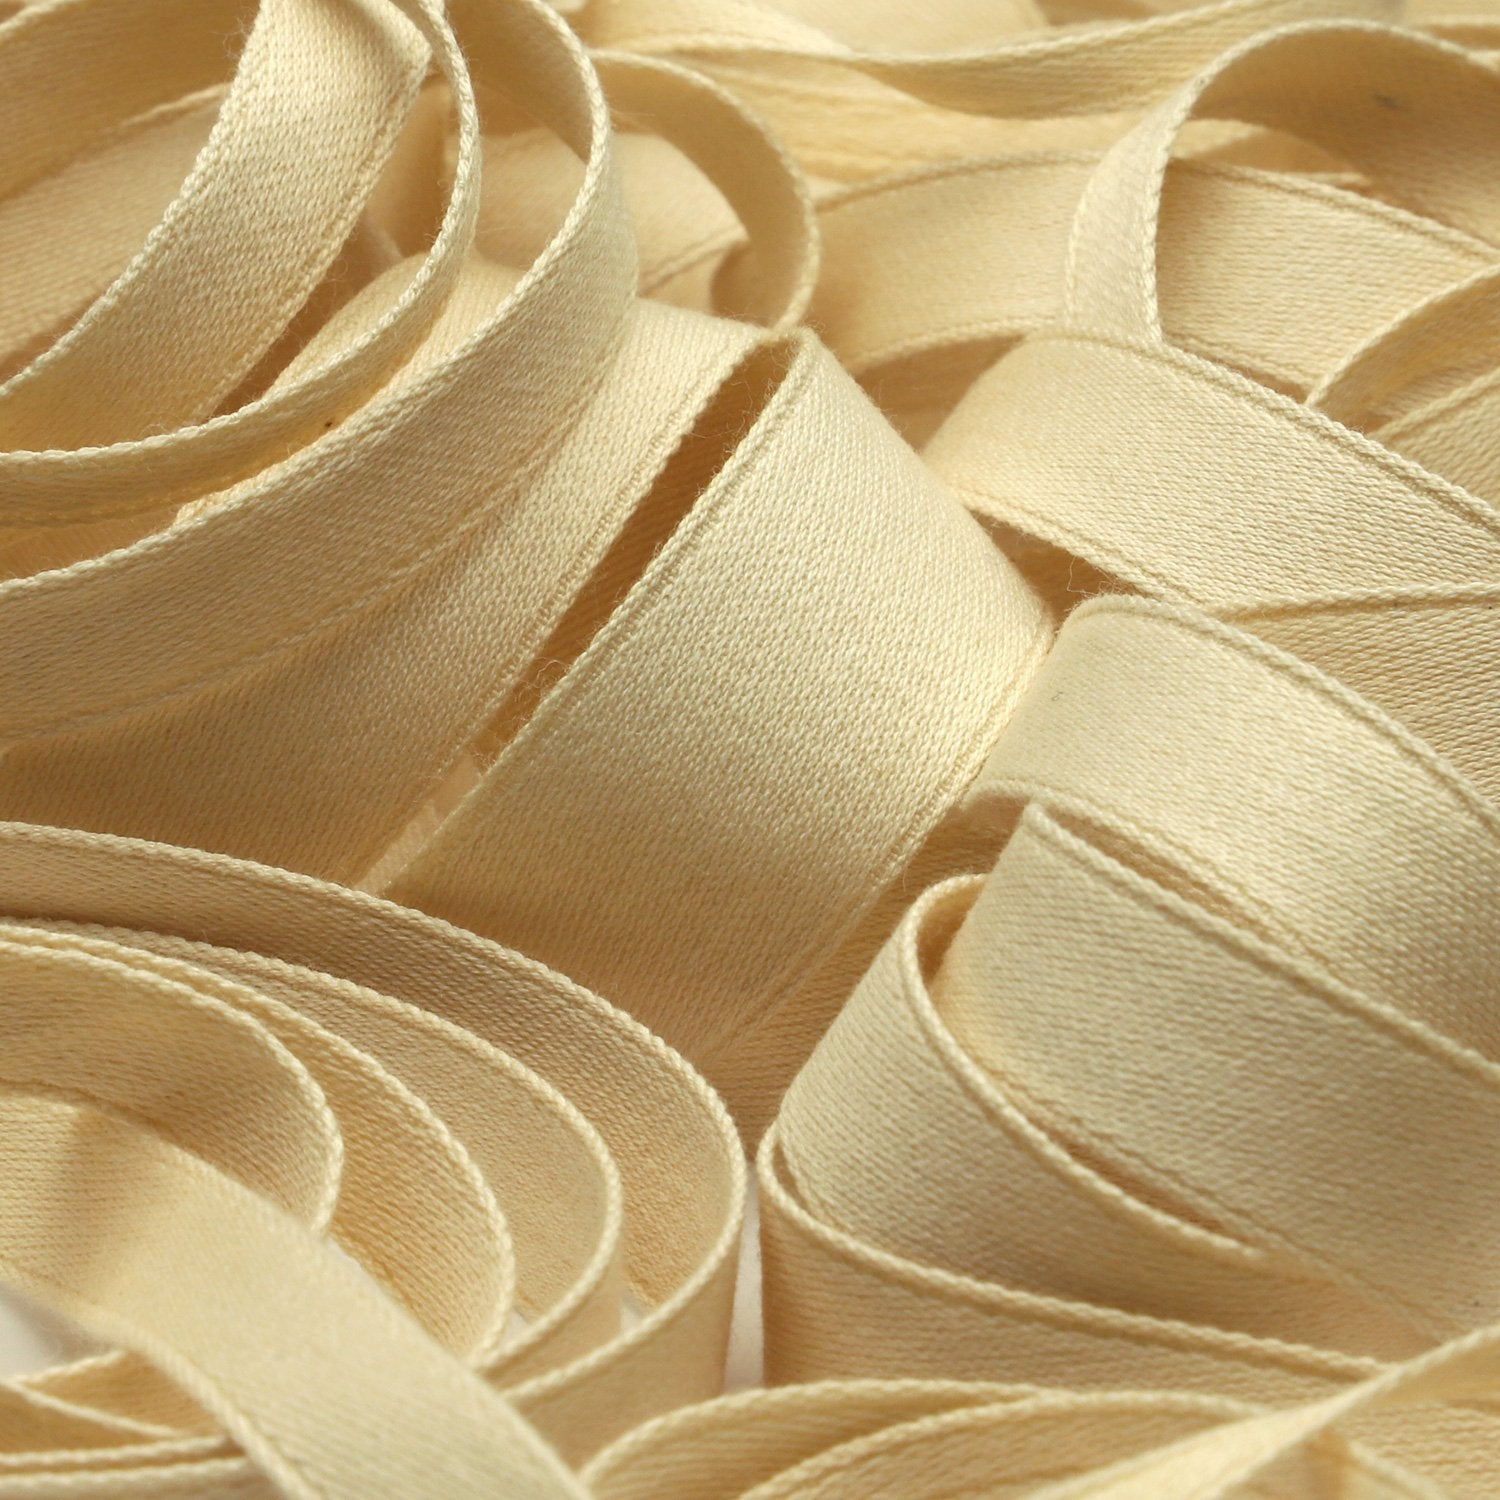 FUJIYAMA RIBBON [Wholesale] Organic Cotton Double-Face Satin Ribbon 6mm Ecru 30 Meters Roll